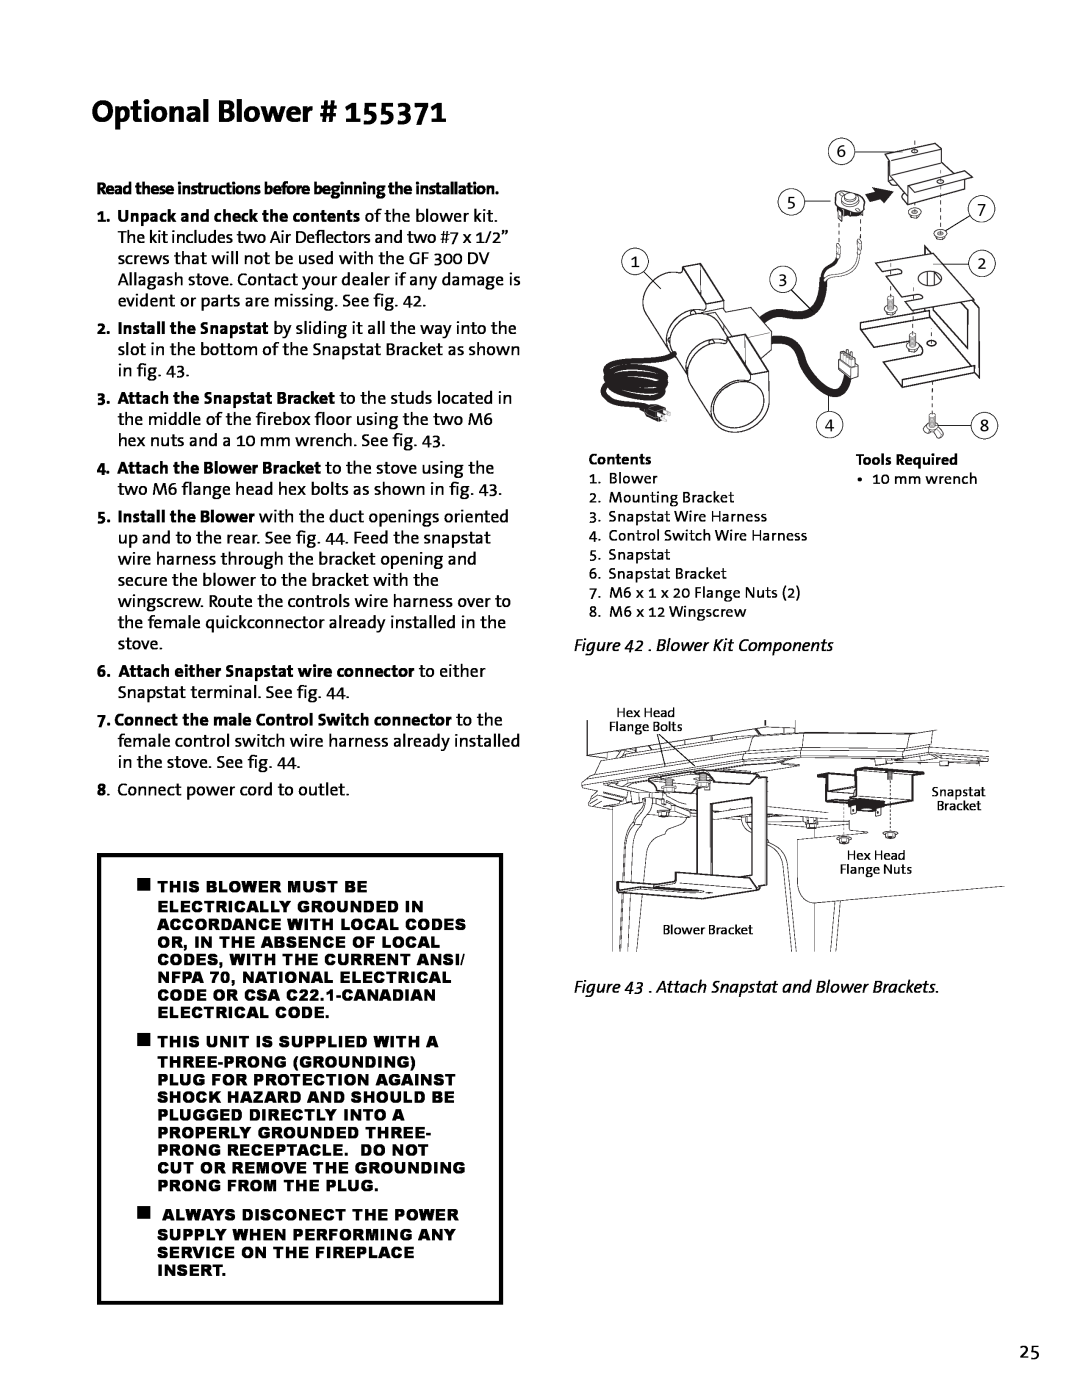 Jotul GF300 DV manual Optional Blower #, Blower Kit Components, Attach Snapstat and Blower Brackets 